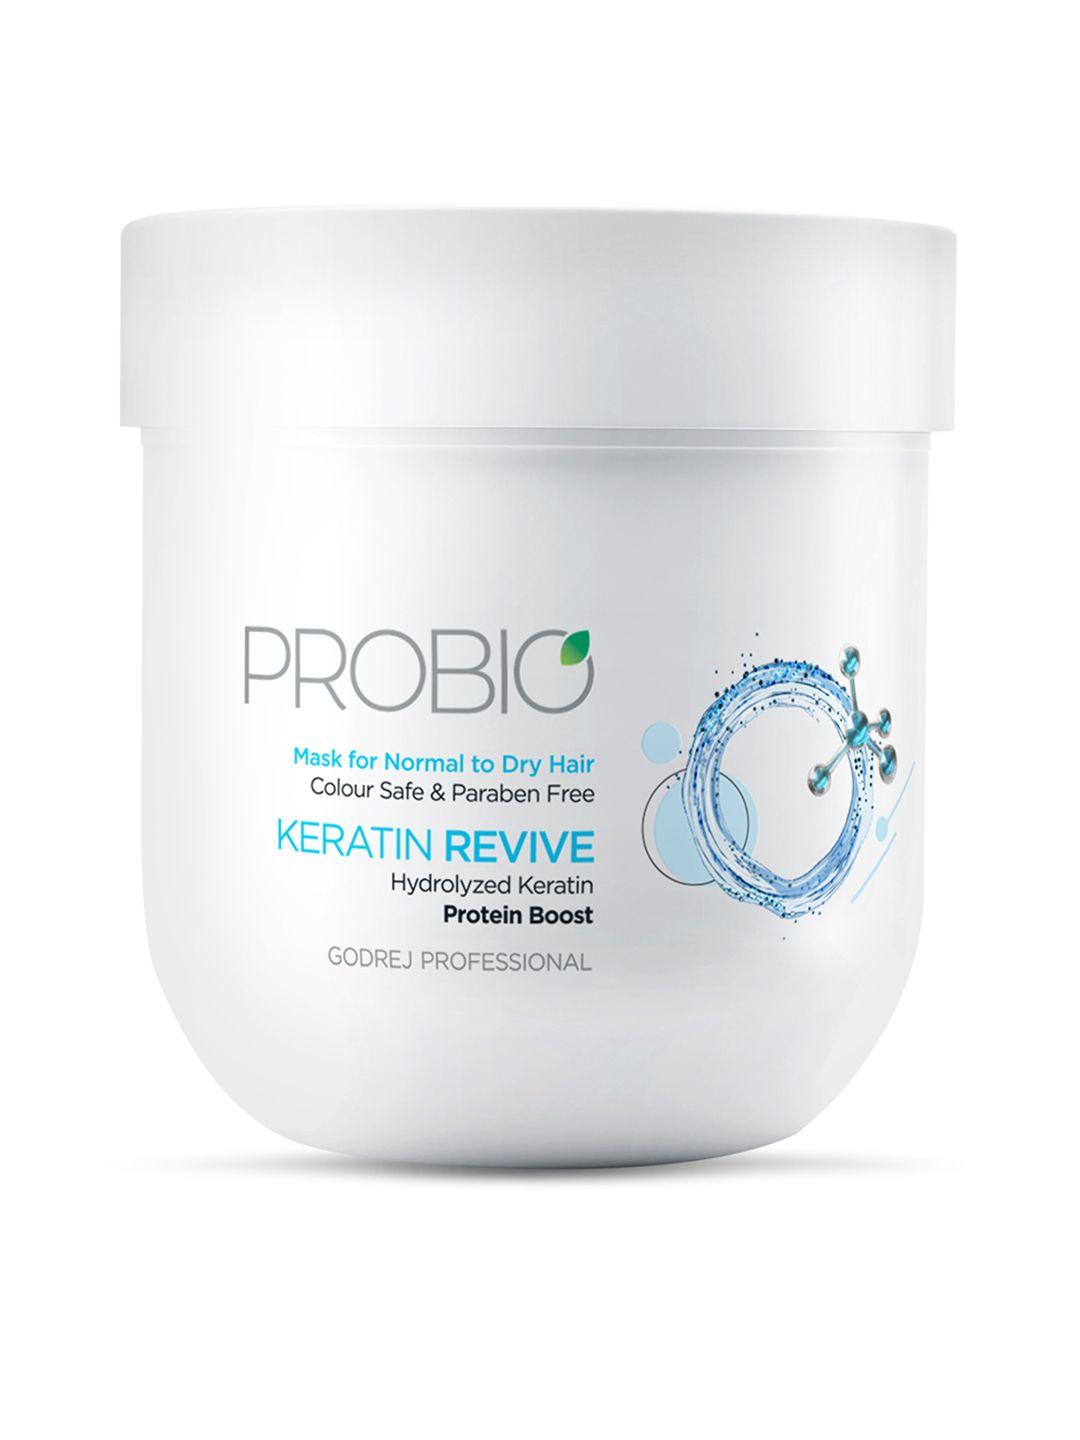 godrej professional probio keratin revive mask for protein boost - 200 g